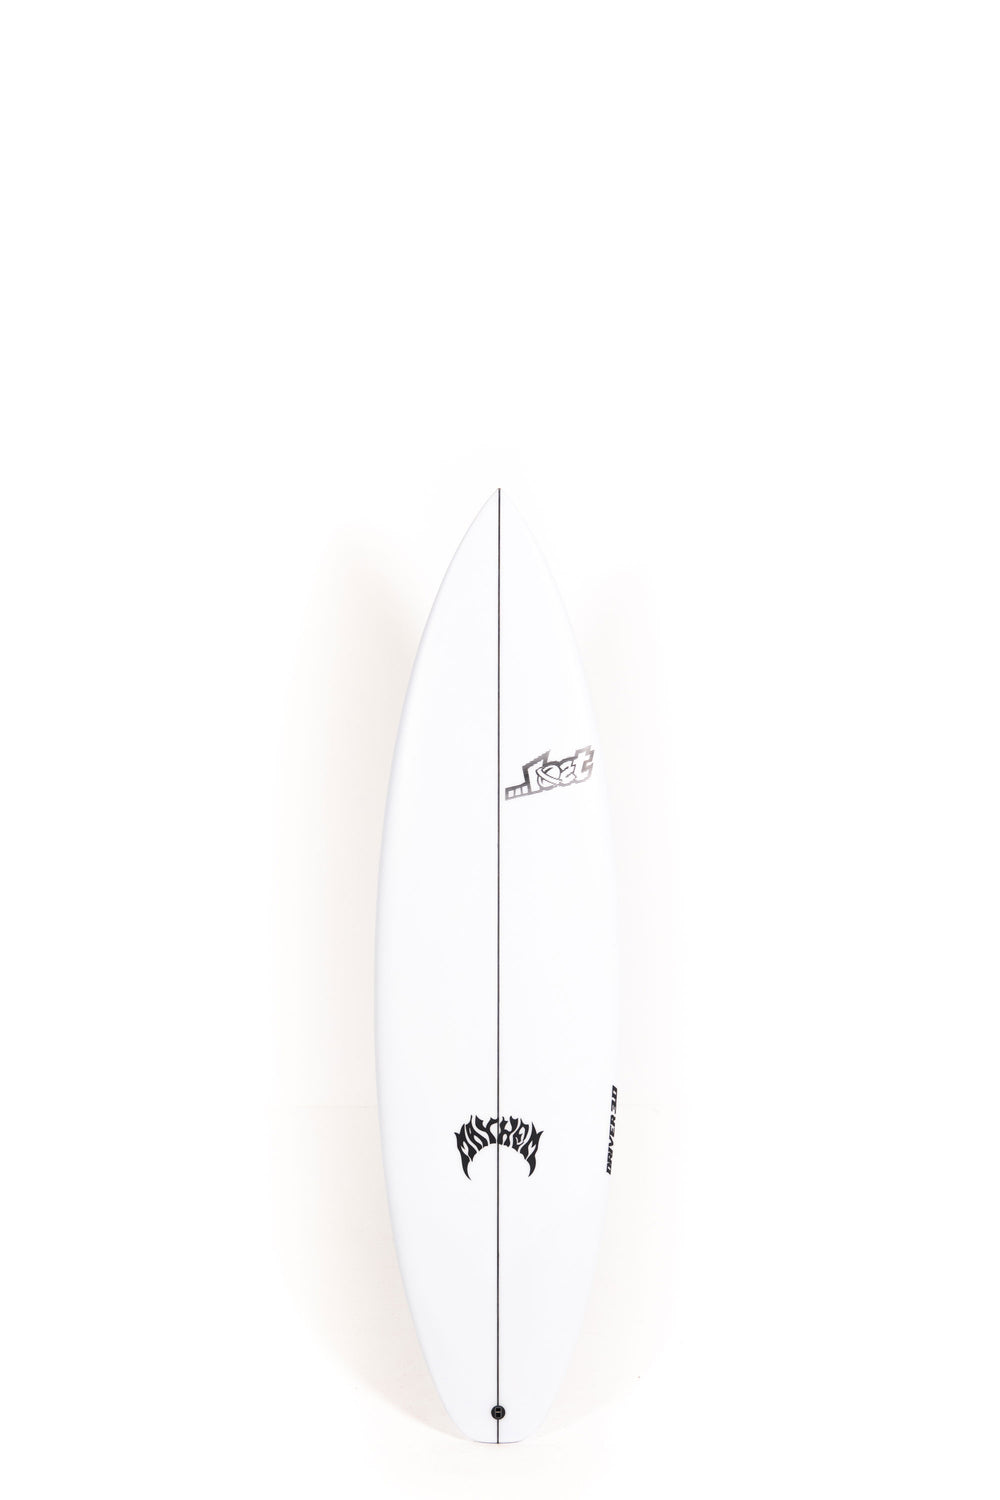 Pukas Surf Shop - Lost Surfboards - DRIVER 3.0 by Matt Biolos - 6'0